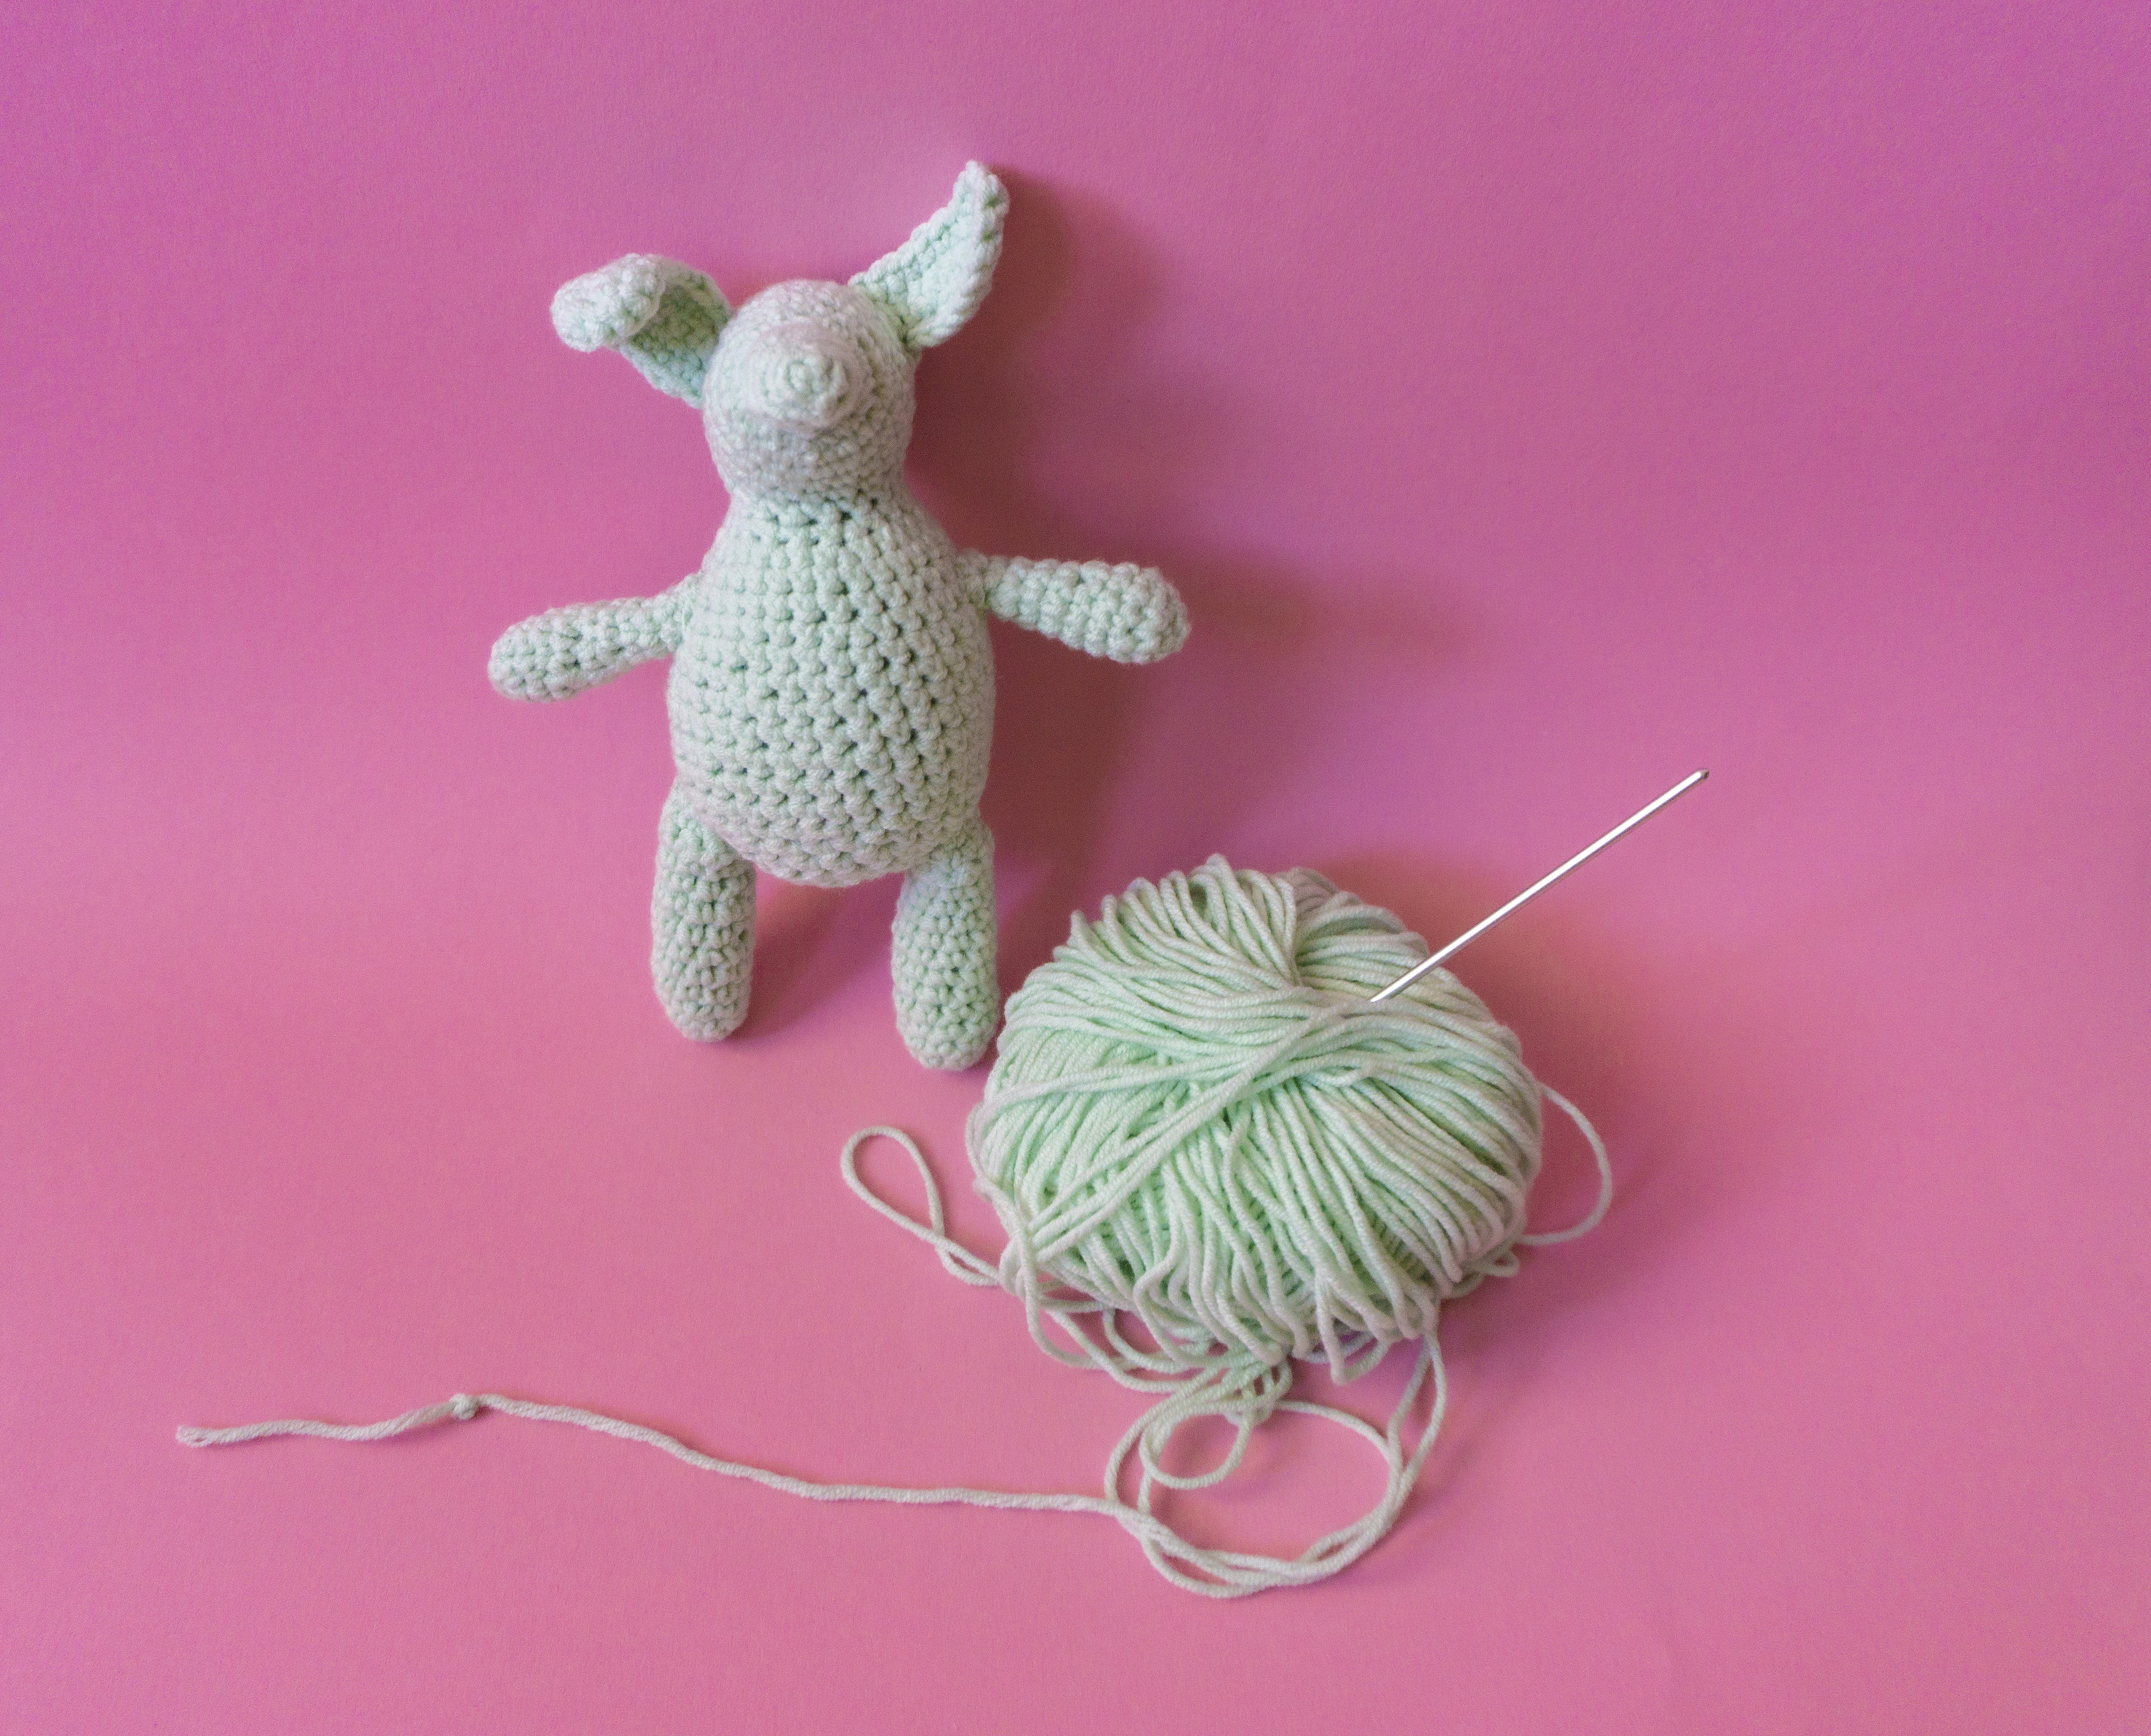 a yarn ball and a stuffed animal